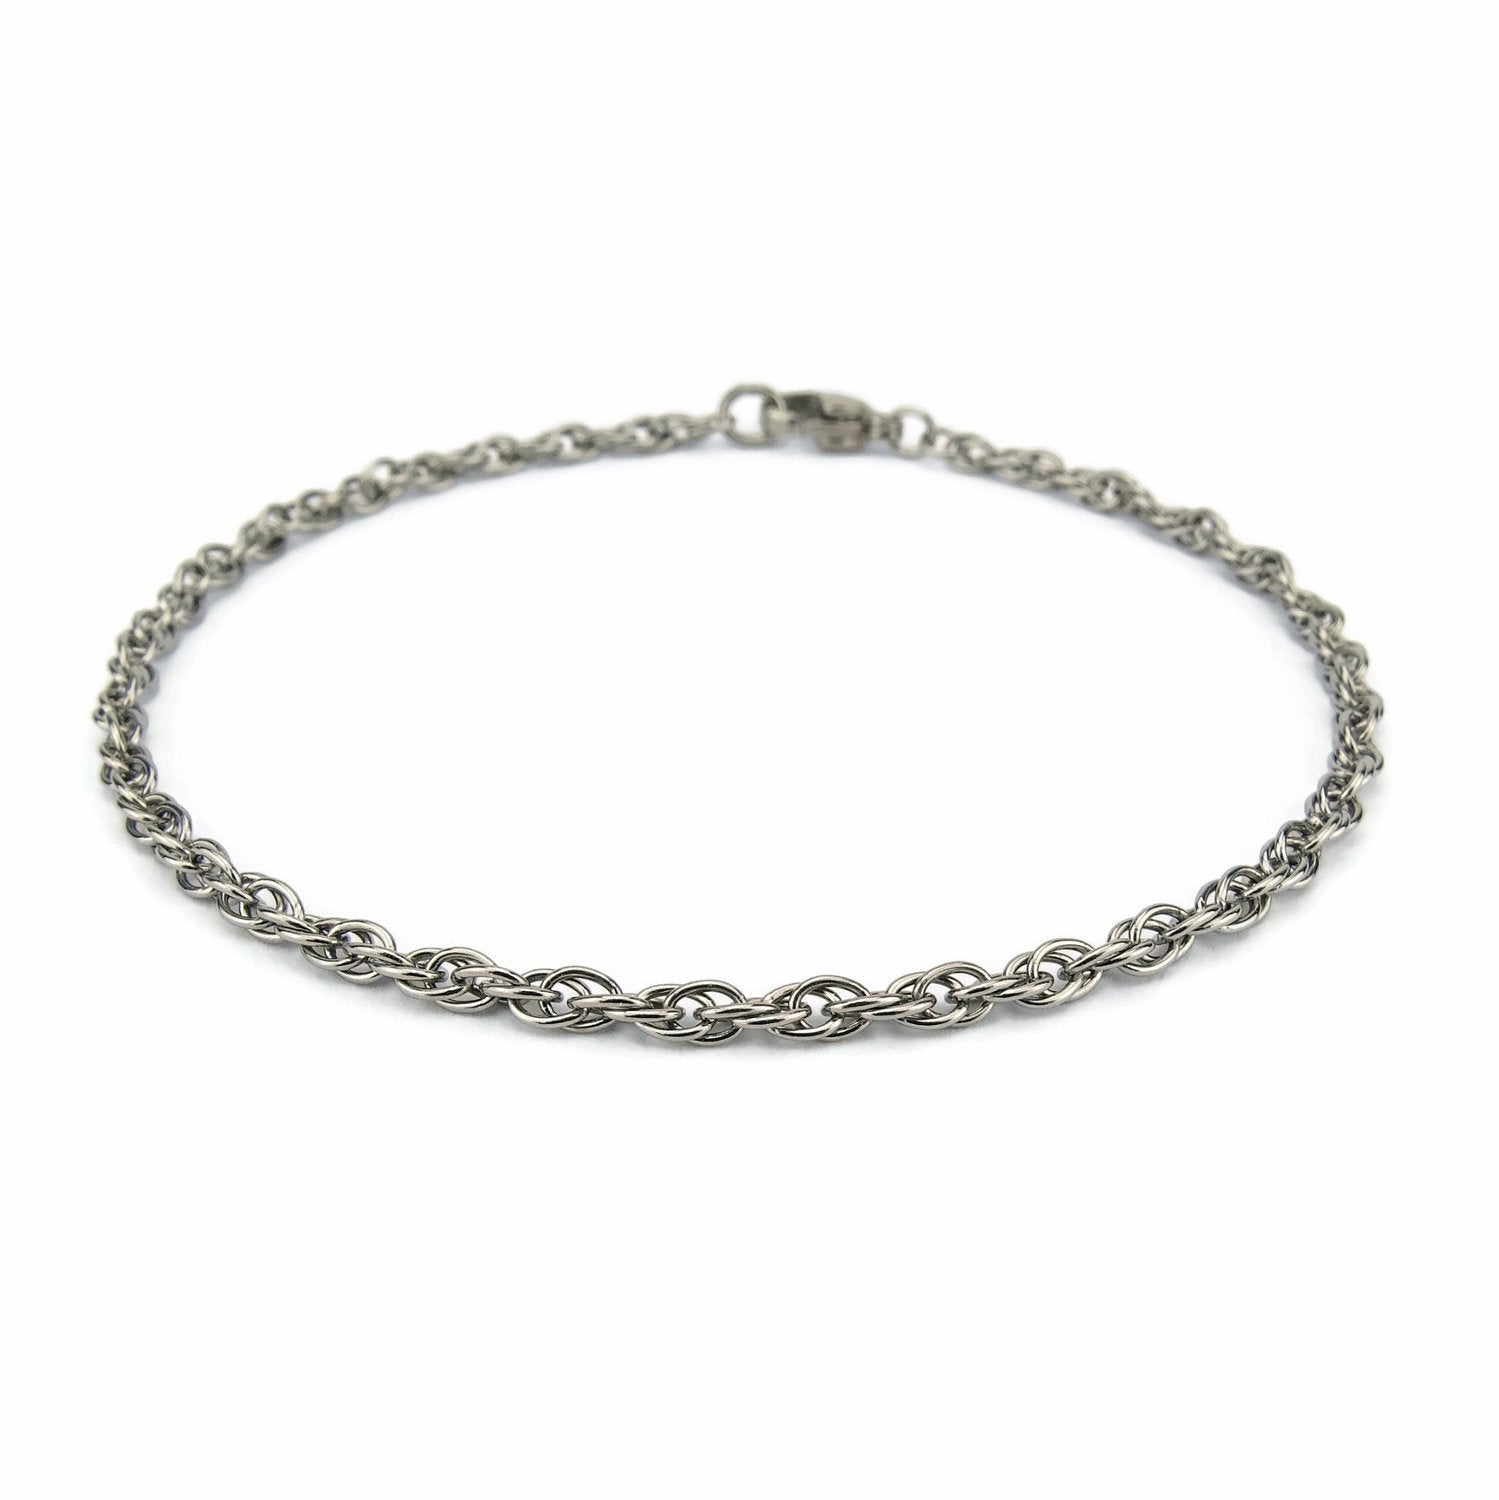 Double Rope Titanium Bracelet, Pure Titanium Chain Bracelet or Anklet for Sensitive Skin, Hypoallergenic Nickel Free Jewellery